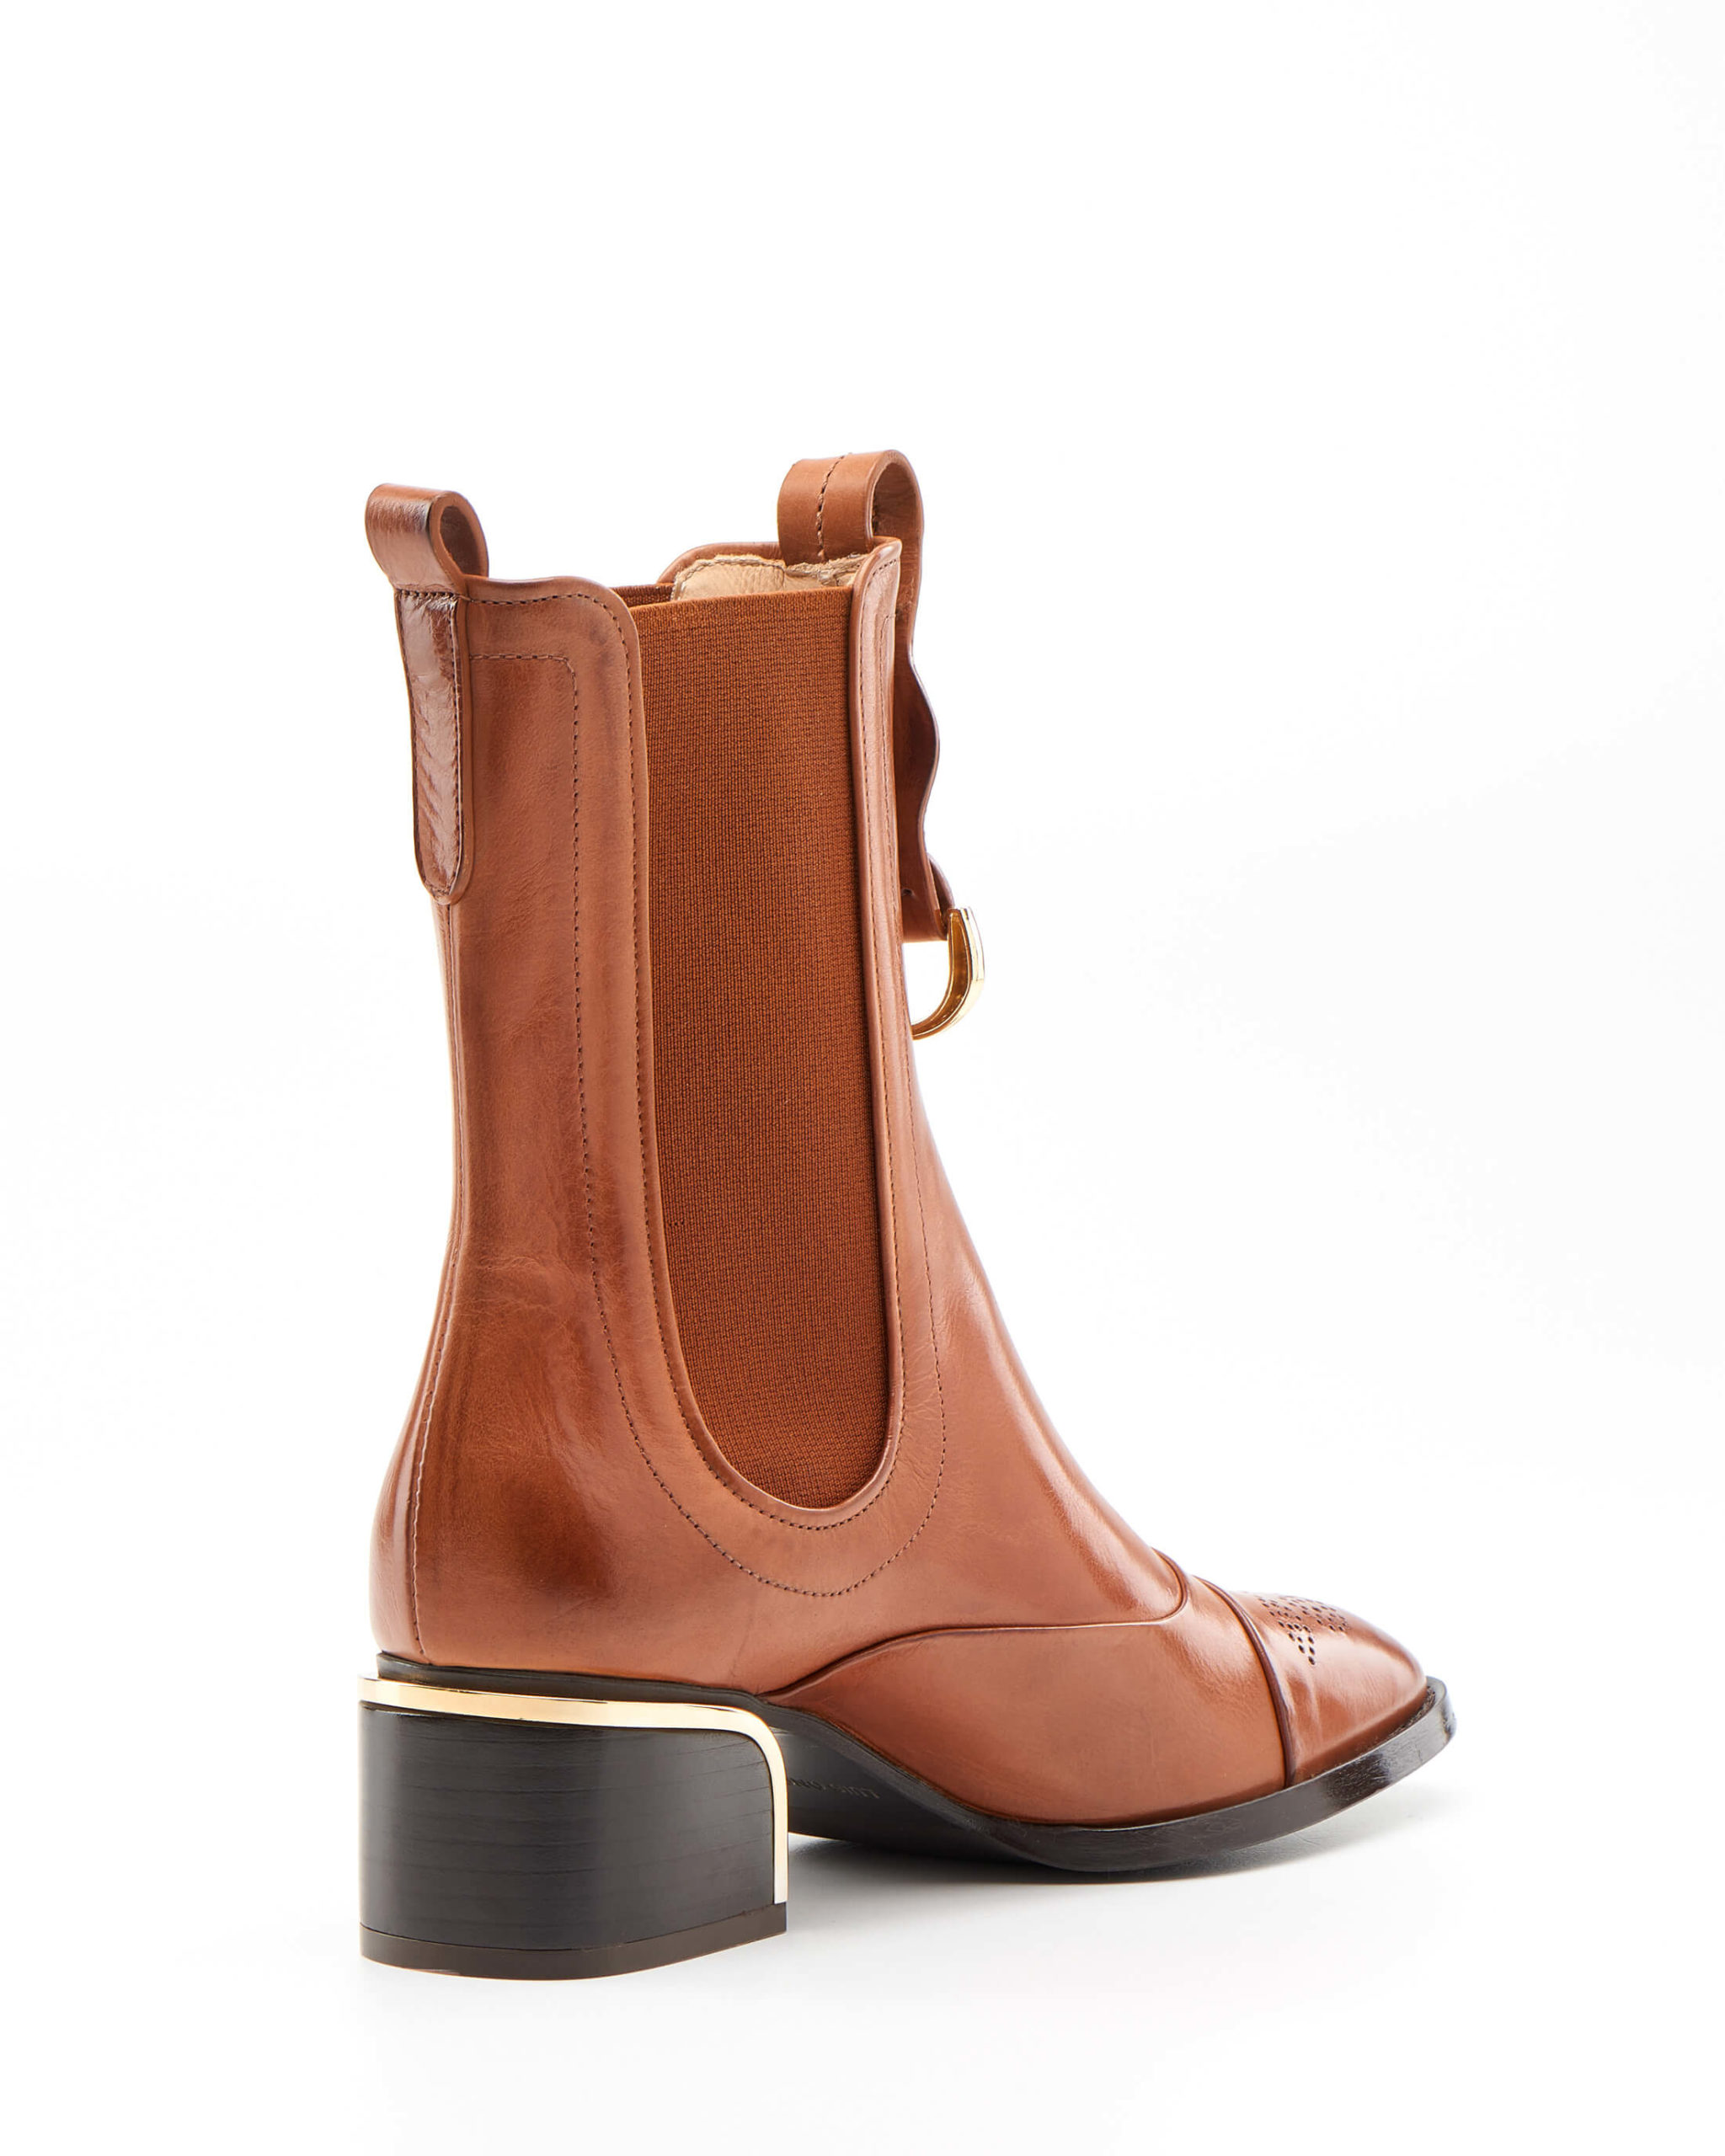 Luis Onofre Portuguese Shoes FW22 – 5286_02 com florao- BURLYWOOD Camel-3